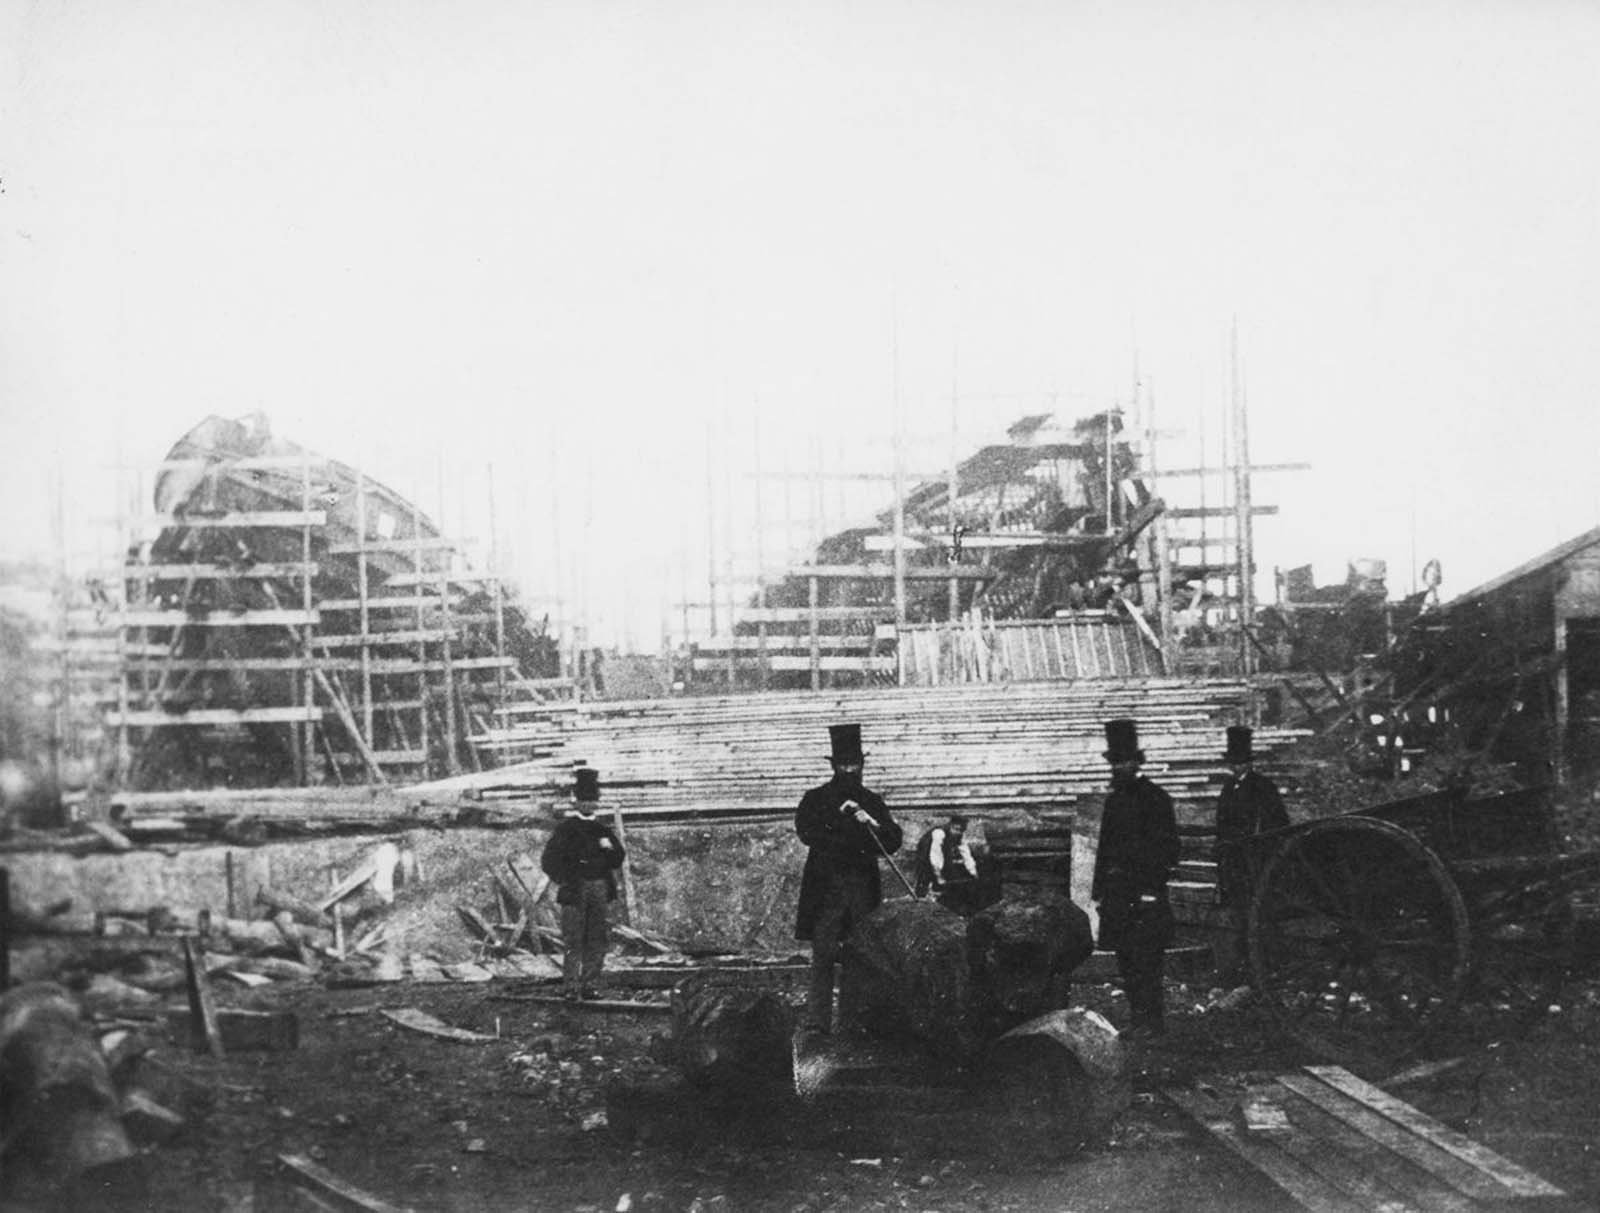 The shipyard of James Ash & Company, London, 1863.